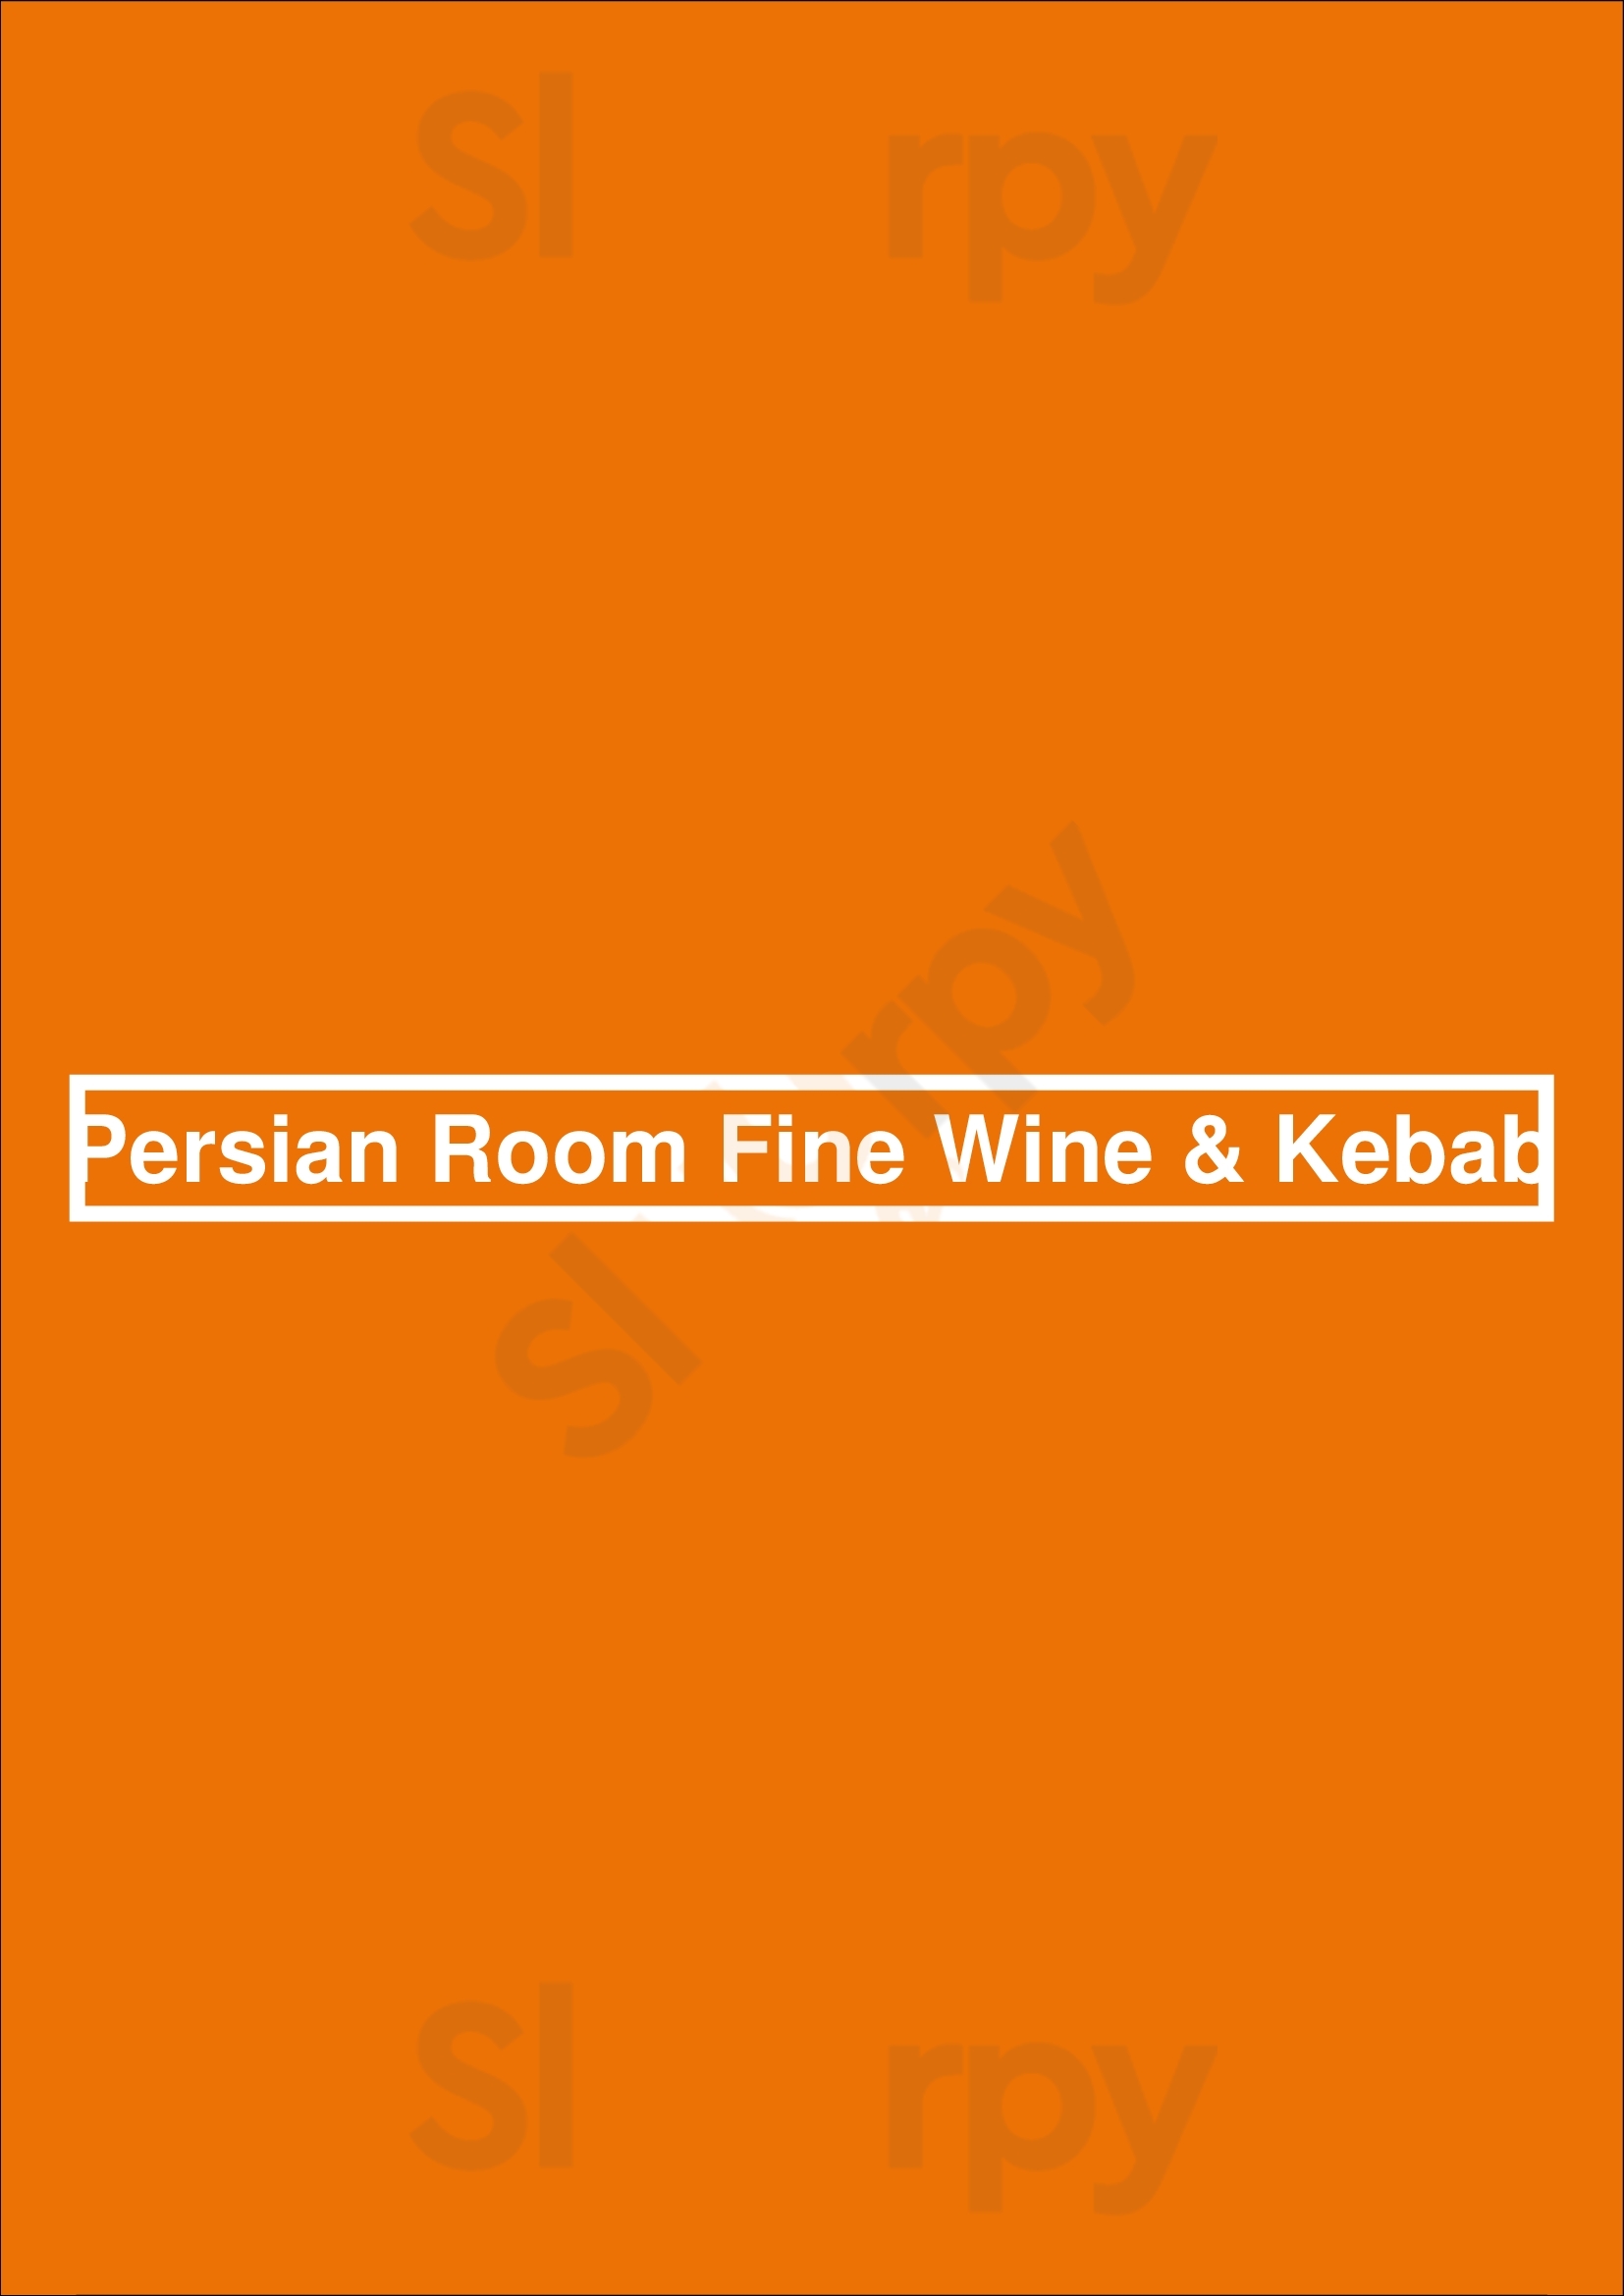 Persian Room Fine Wine & Kebab Scottsdale Menu - 1